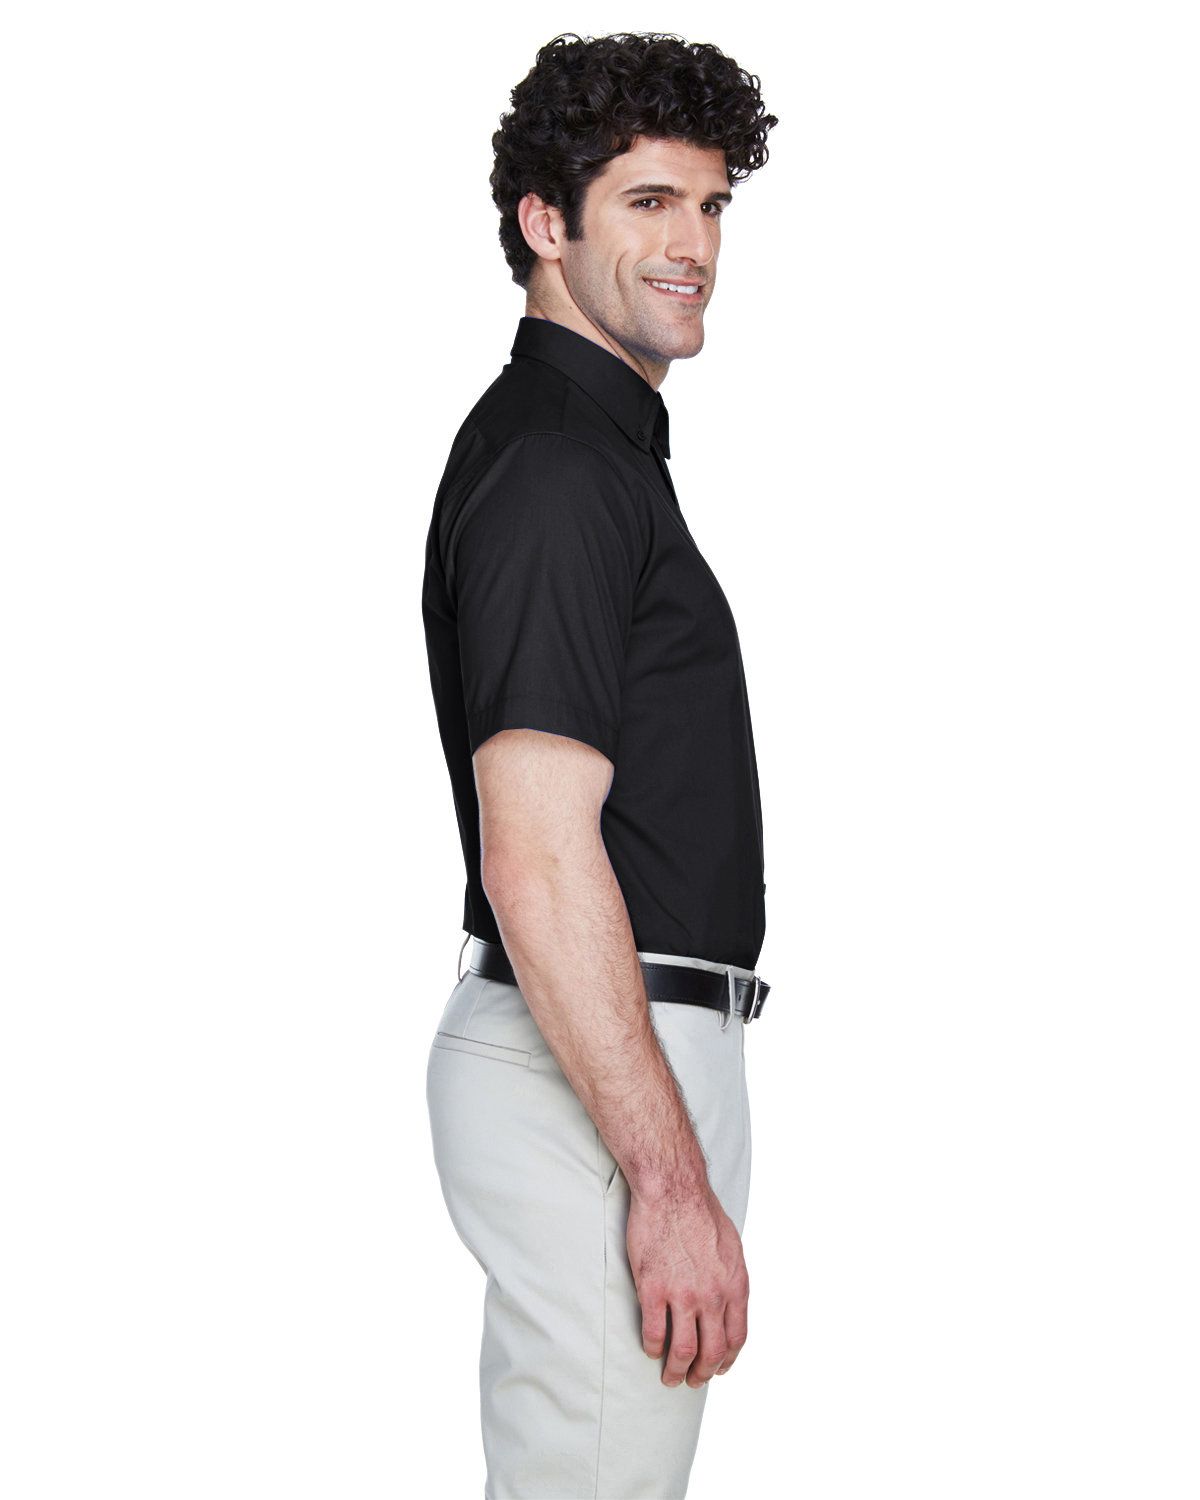 'Core365 88194T Men's Optimum Short Sleeve Twill Shirt'